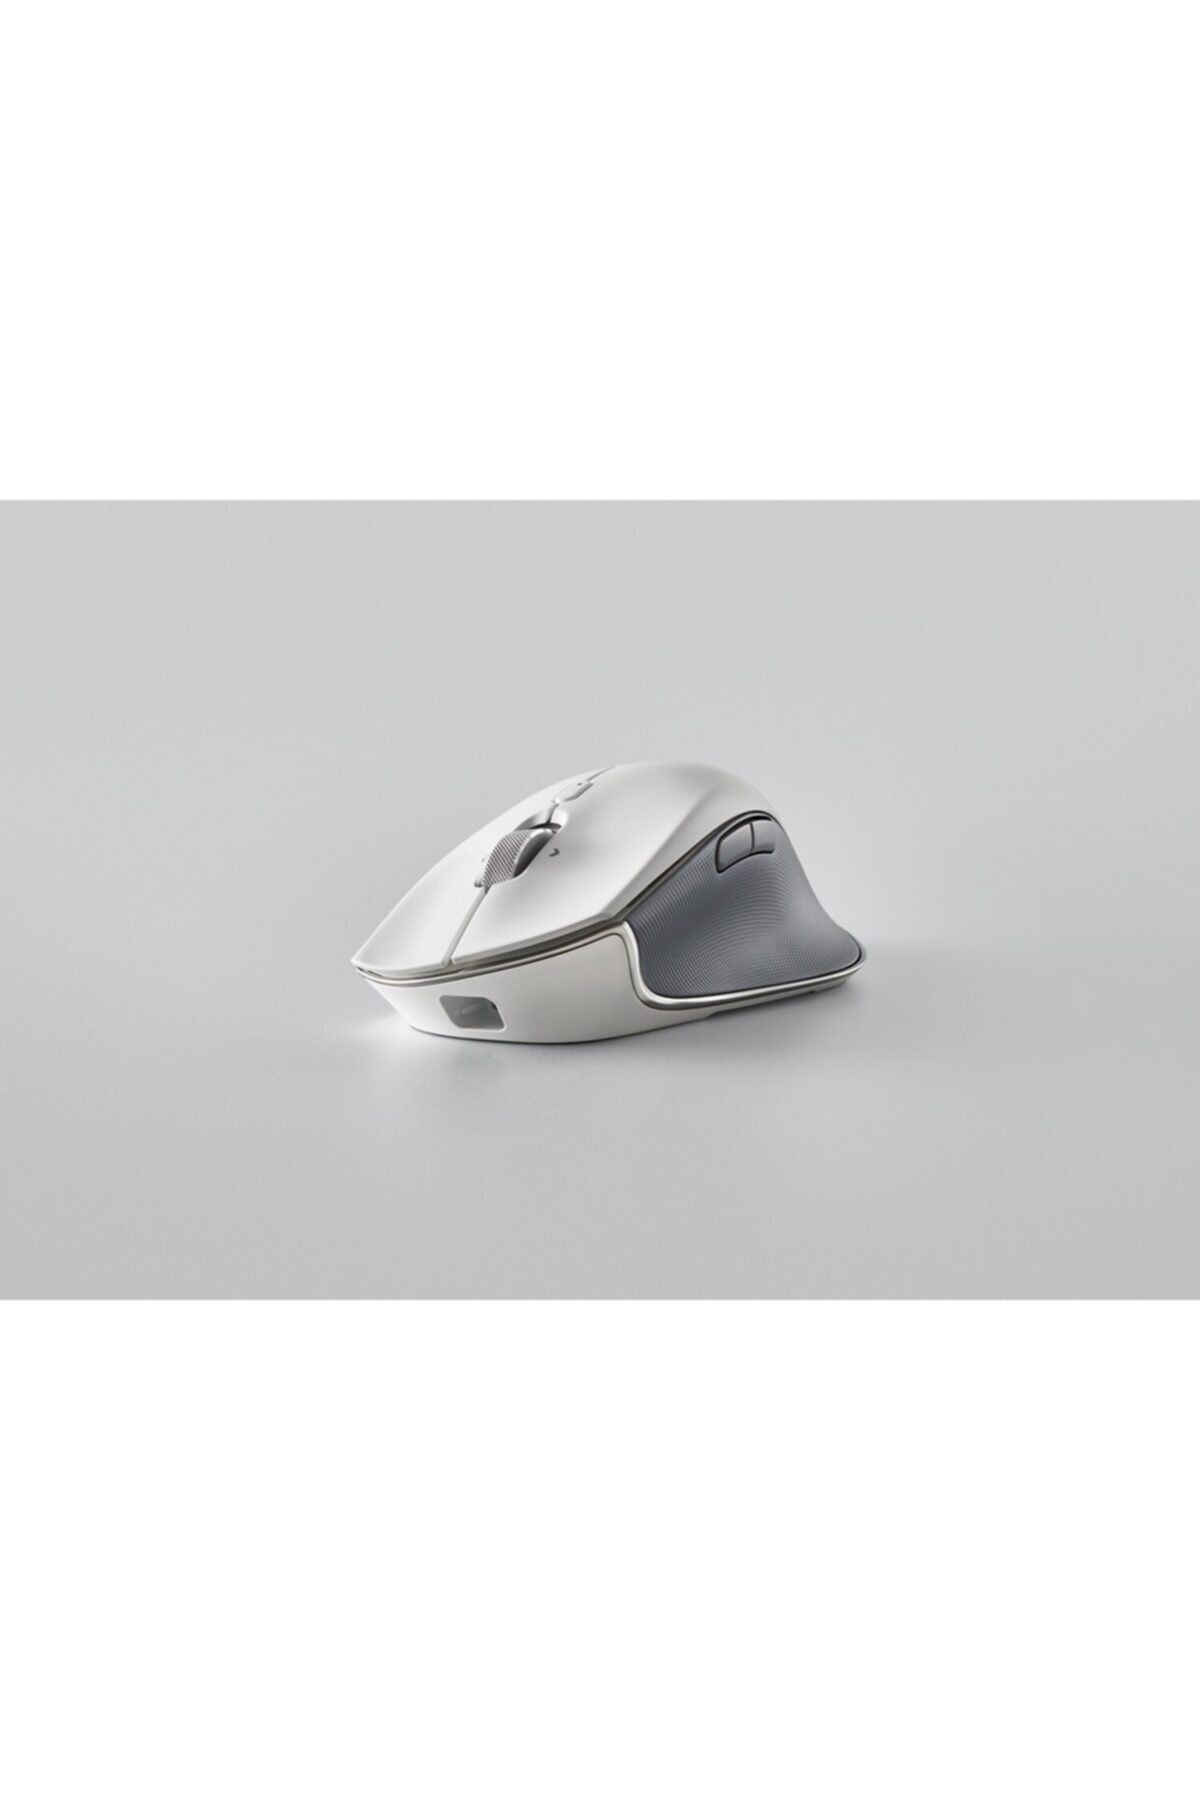 RAZER Pro Rz01-02990100-r3m1 Click Optik Kablosuz Oyuncu Mouse